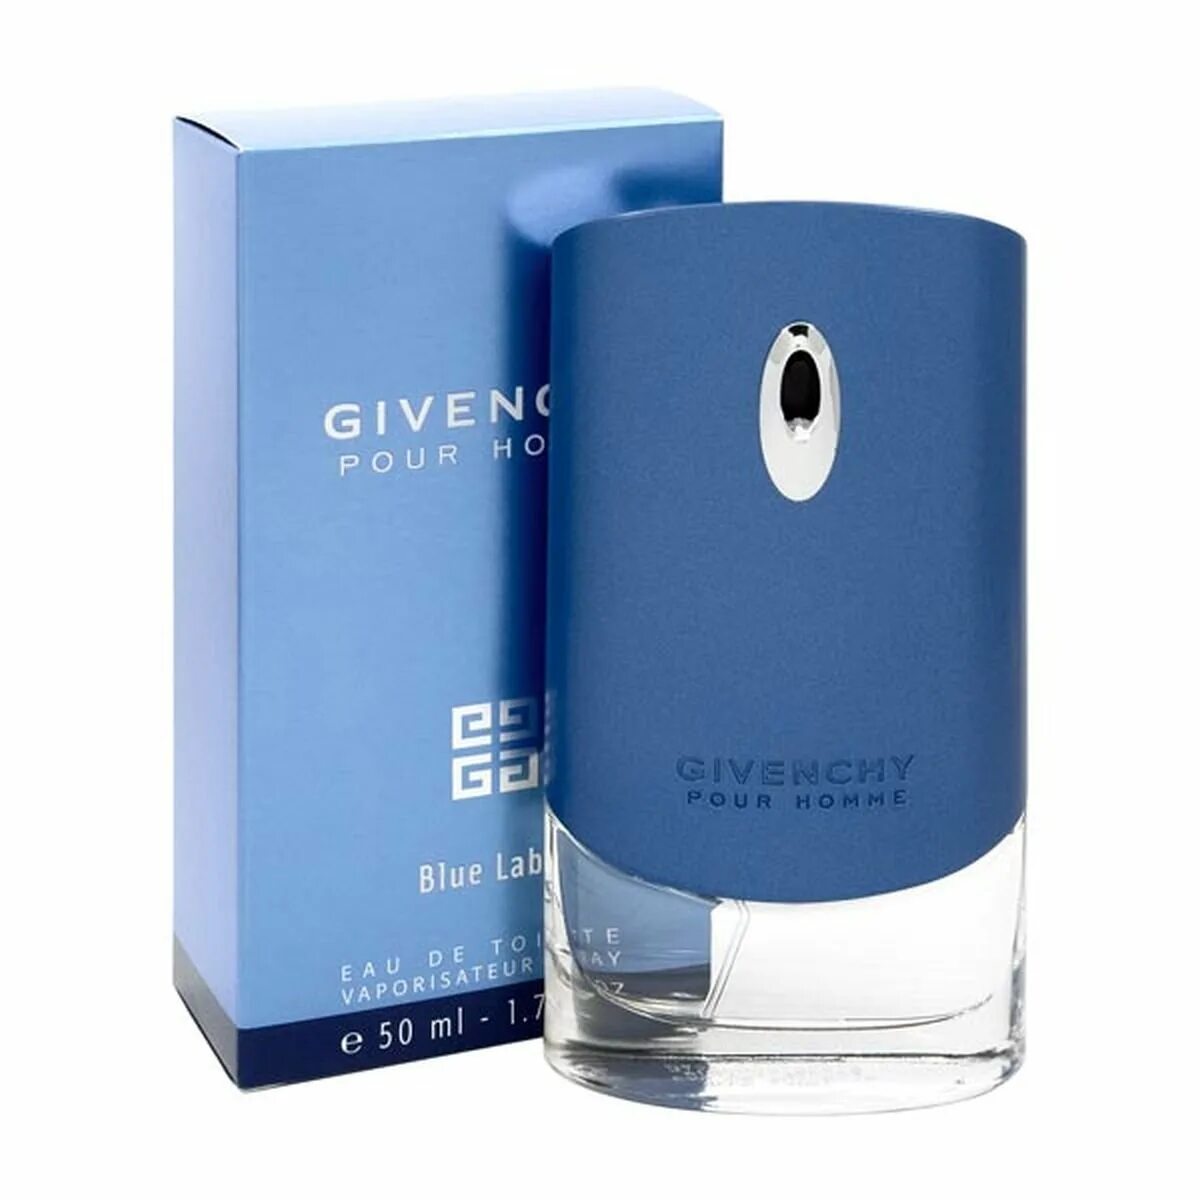 Givenchy Blue Label. Дживанши мужские Блю 50мл. Givenchy Blue Label 50. Givenchy Blue Label (мужские) 50ml. Живанши хом мужские